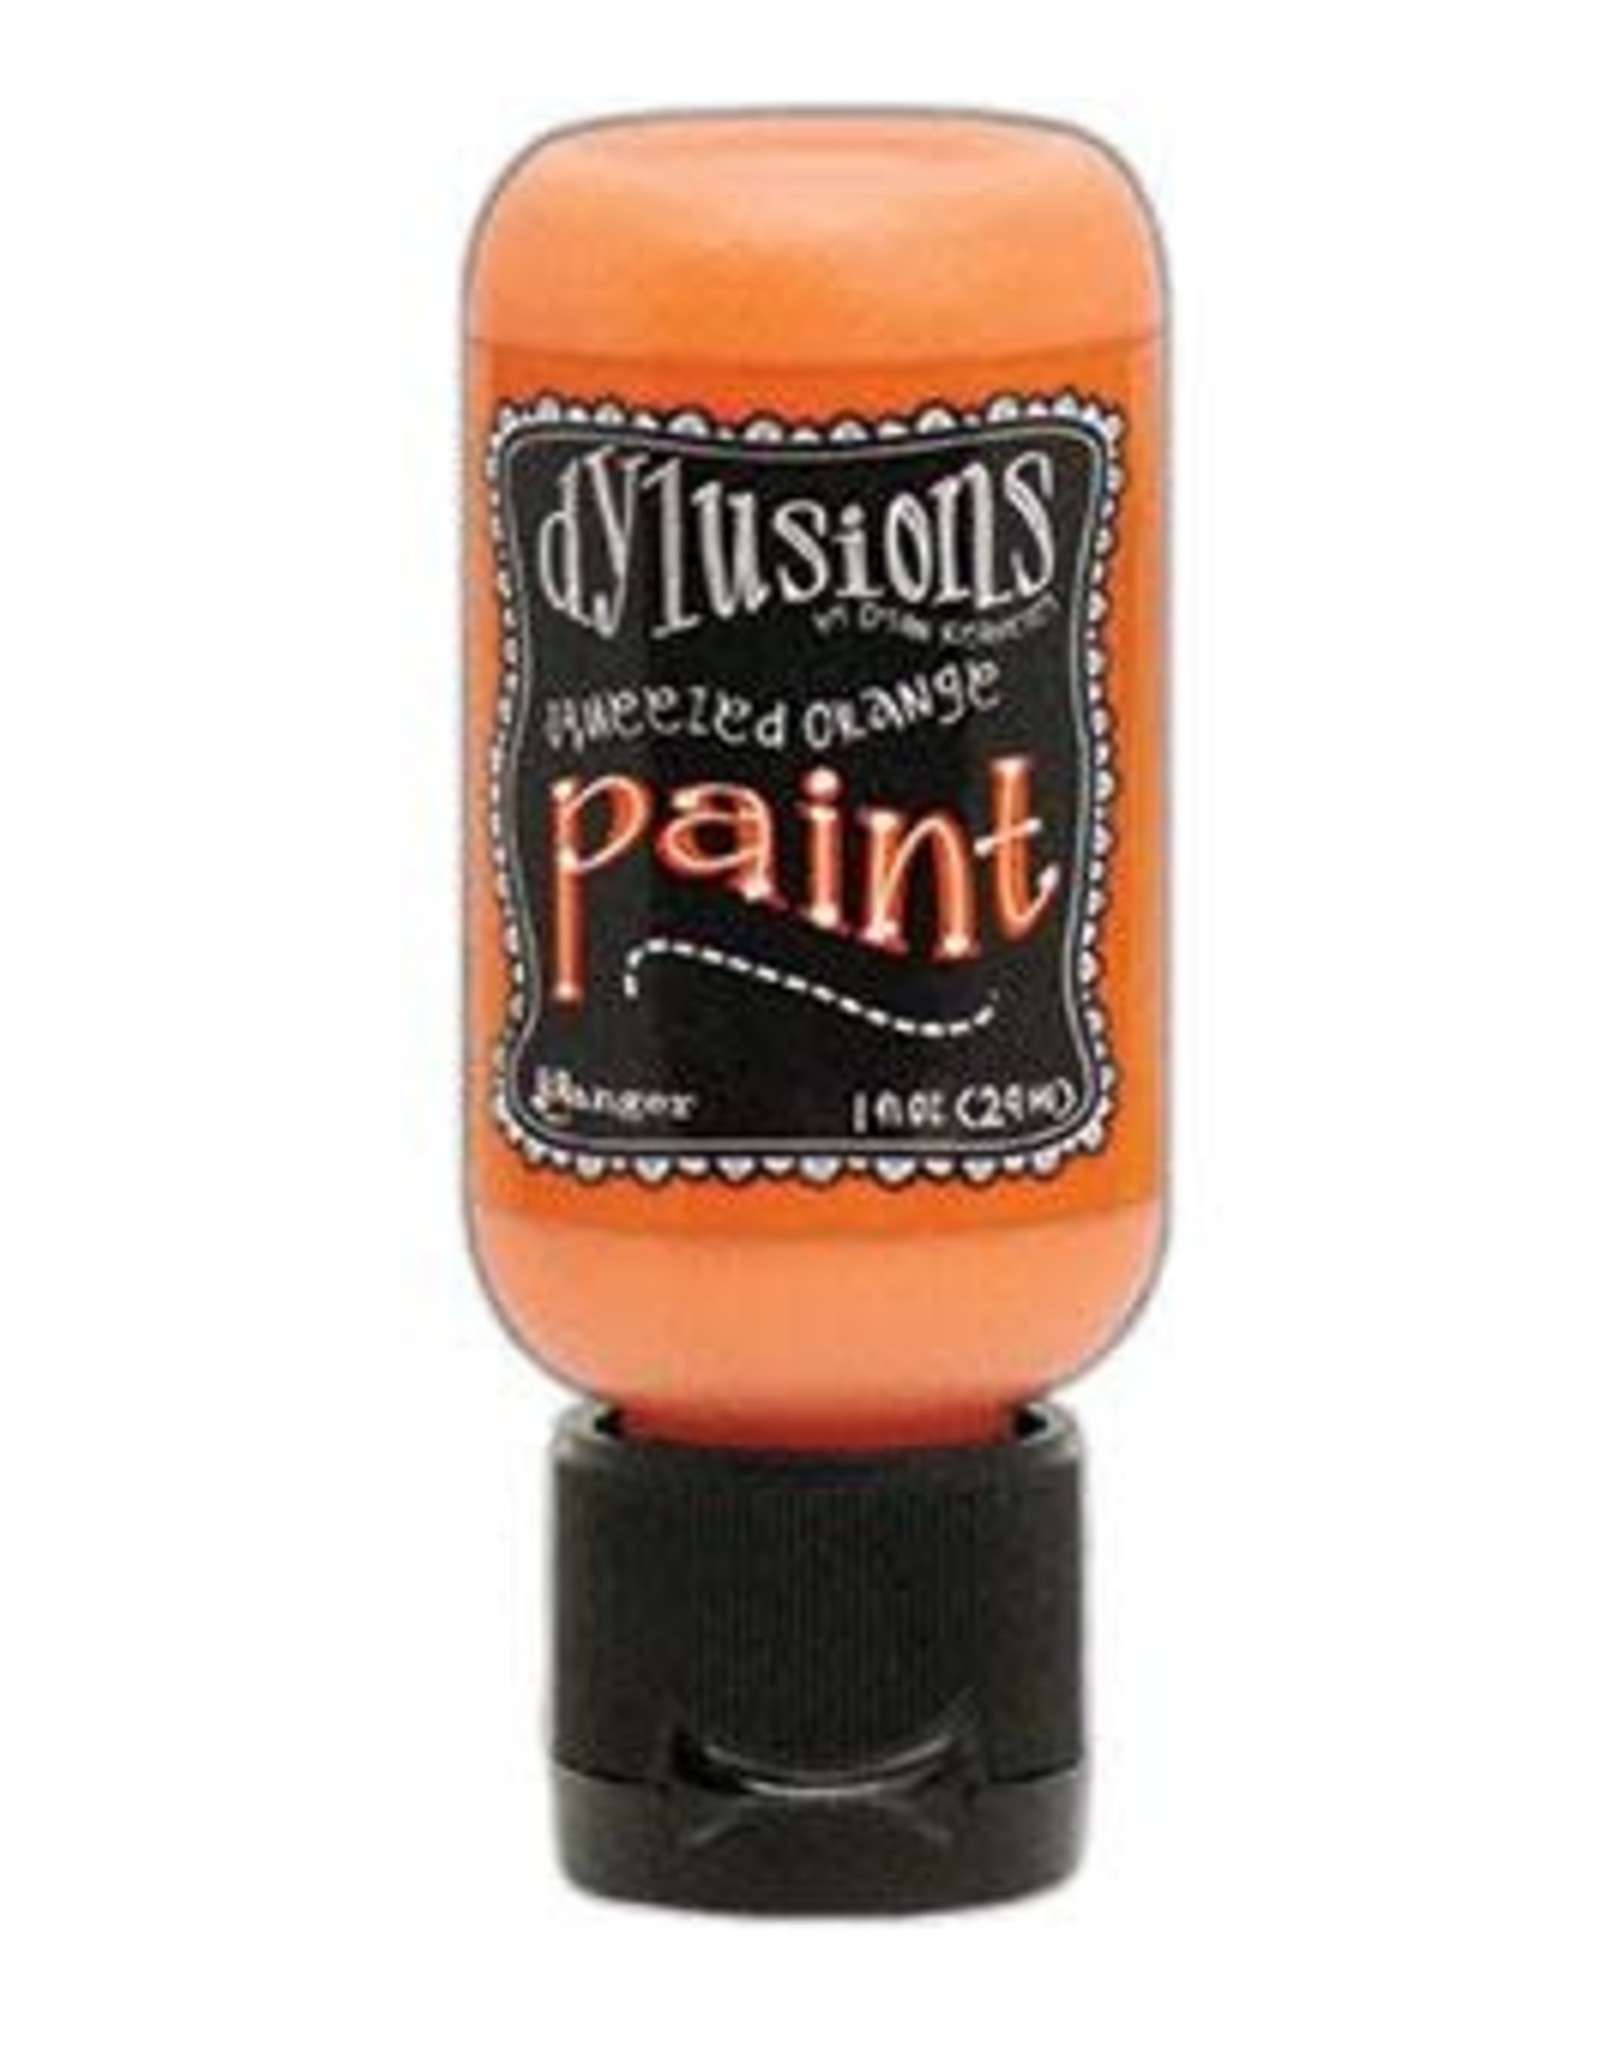 Dylusions DYL Paint 1 oz Squeezed orange